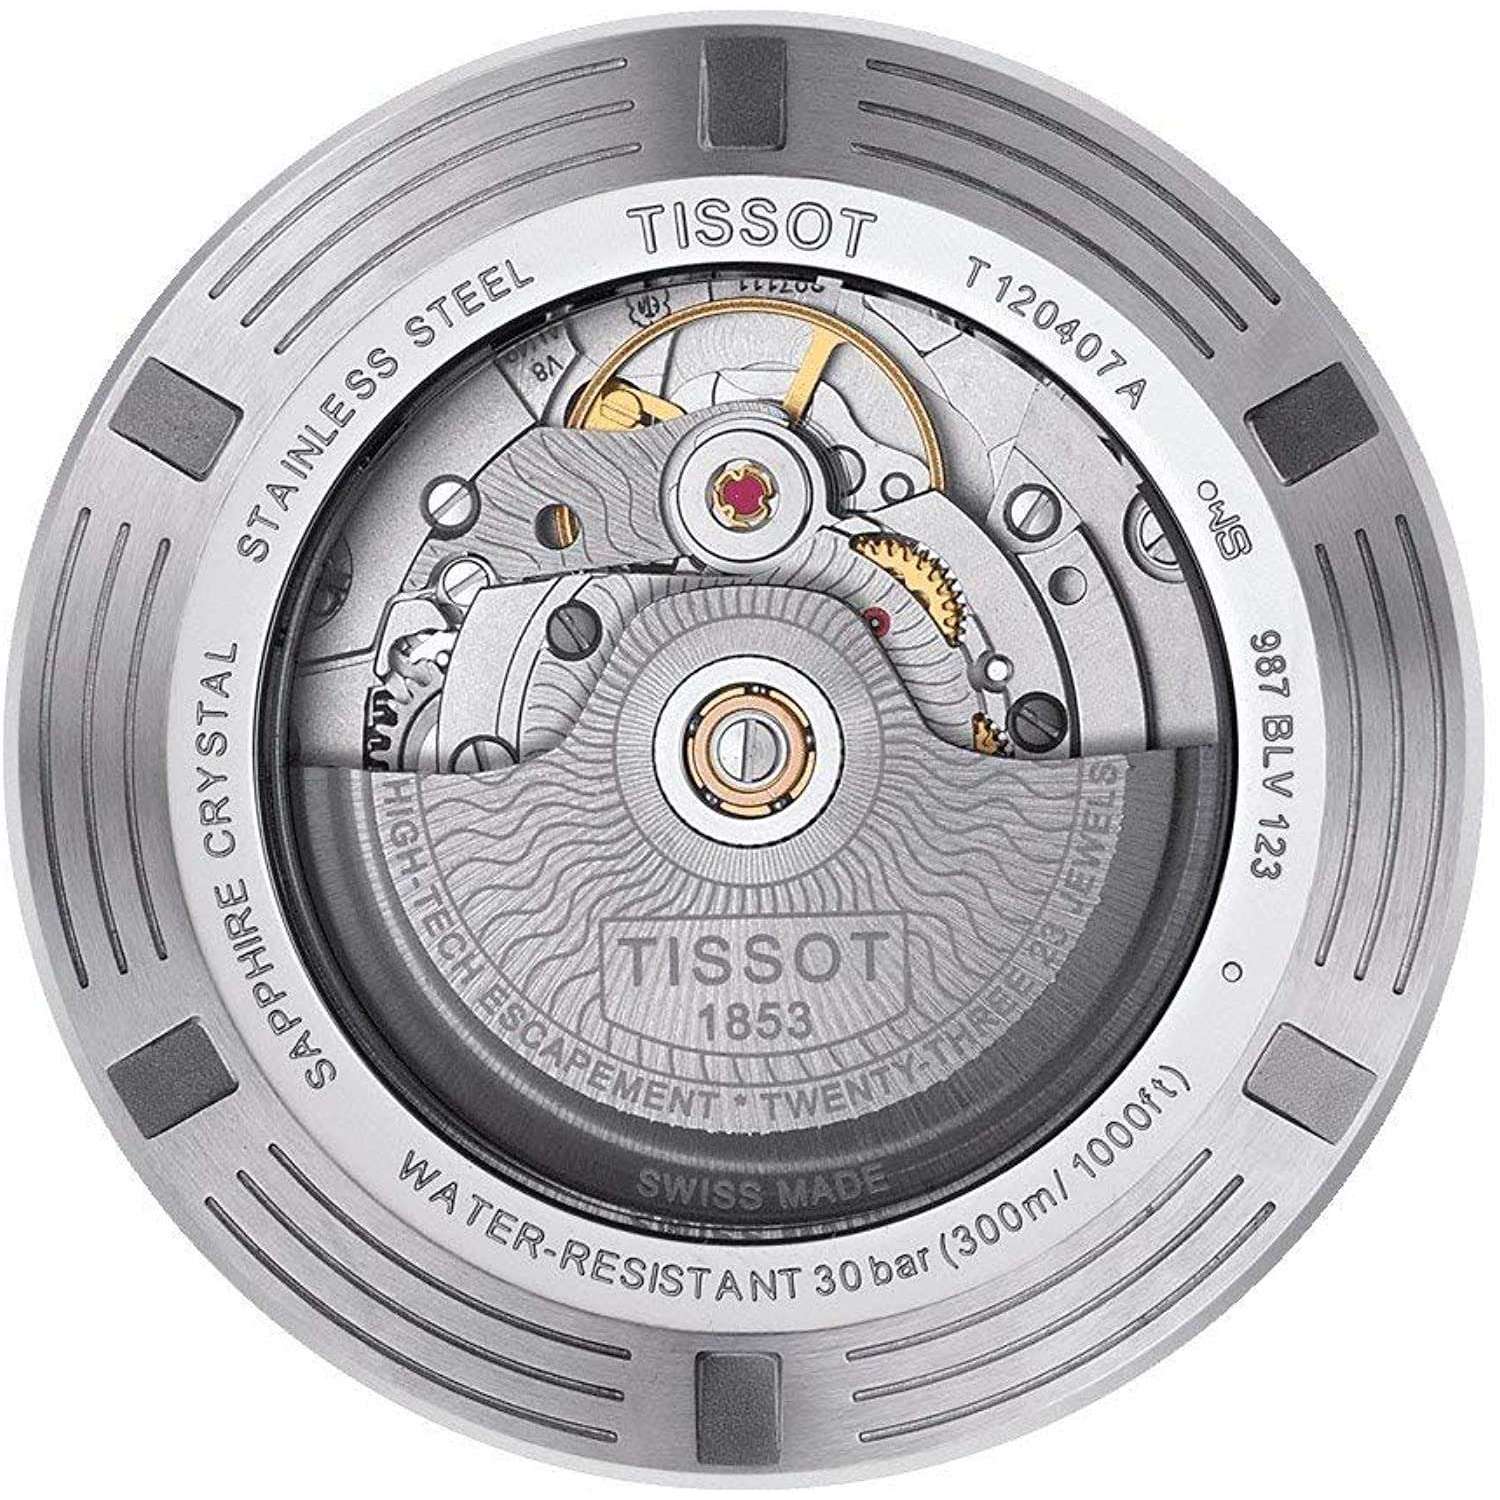 ROOK JAPAN:TISSOT SEASTAR POWERMATIC 80 AUTOMATIC 43 MM MEN WATCH T1204071704100,Luxury Watch,Tissot Seastar